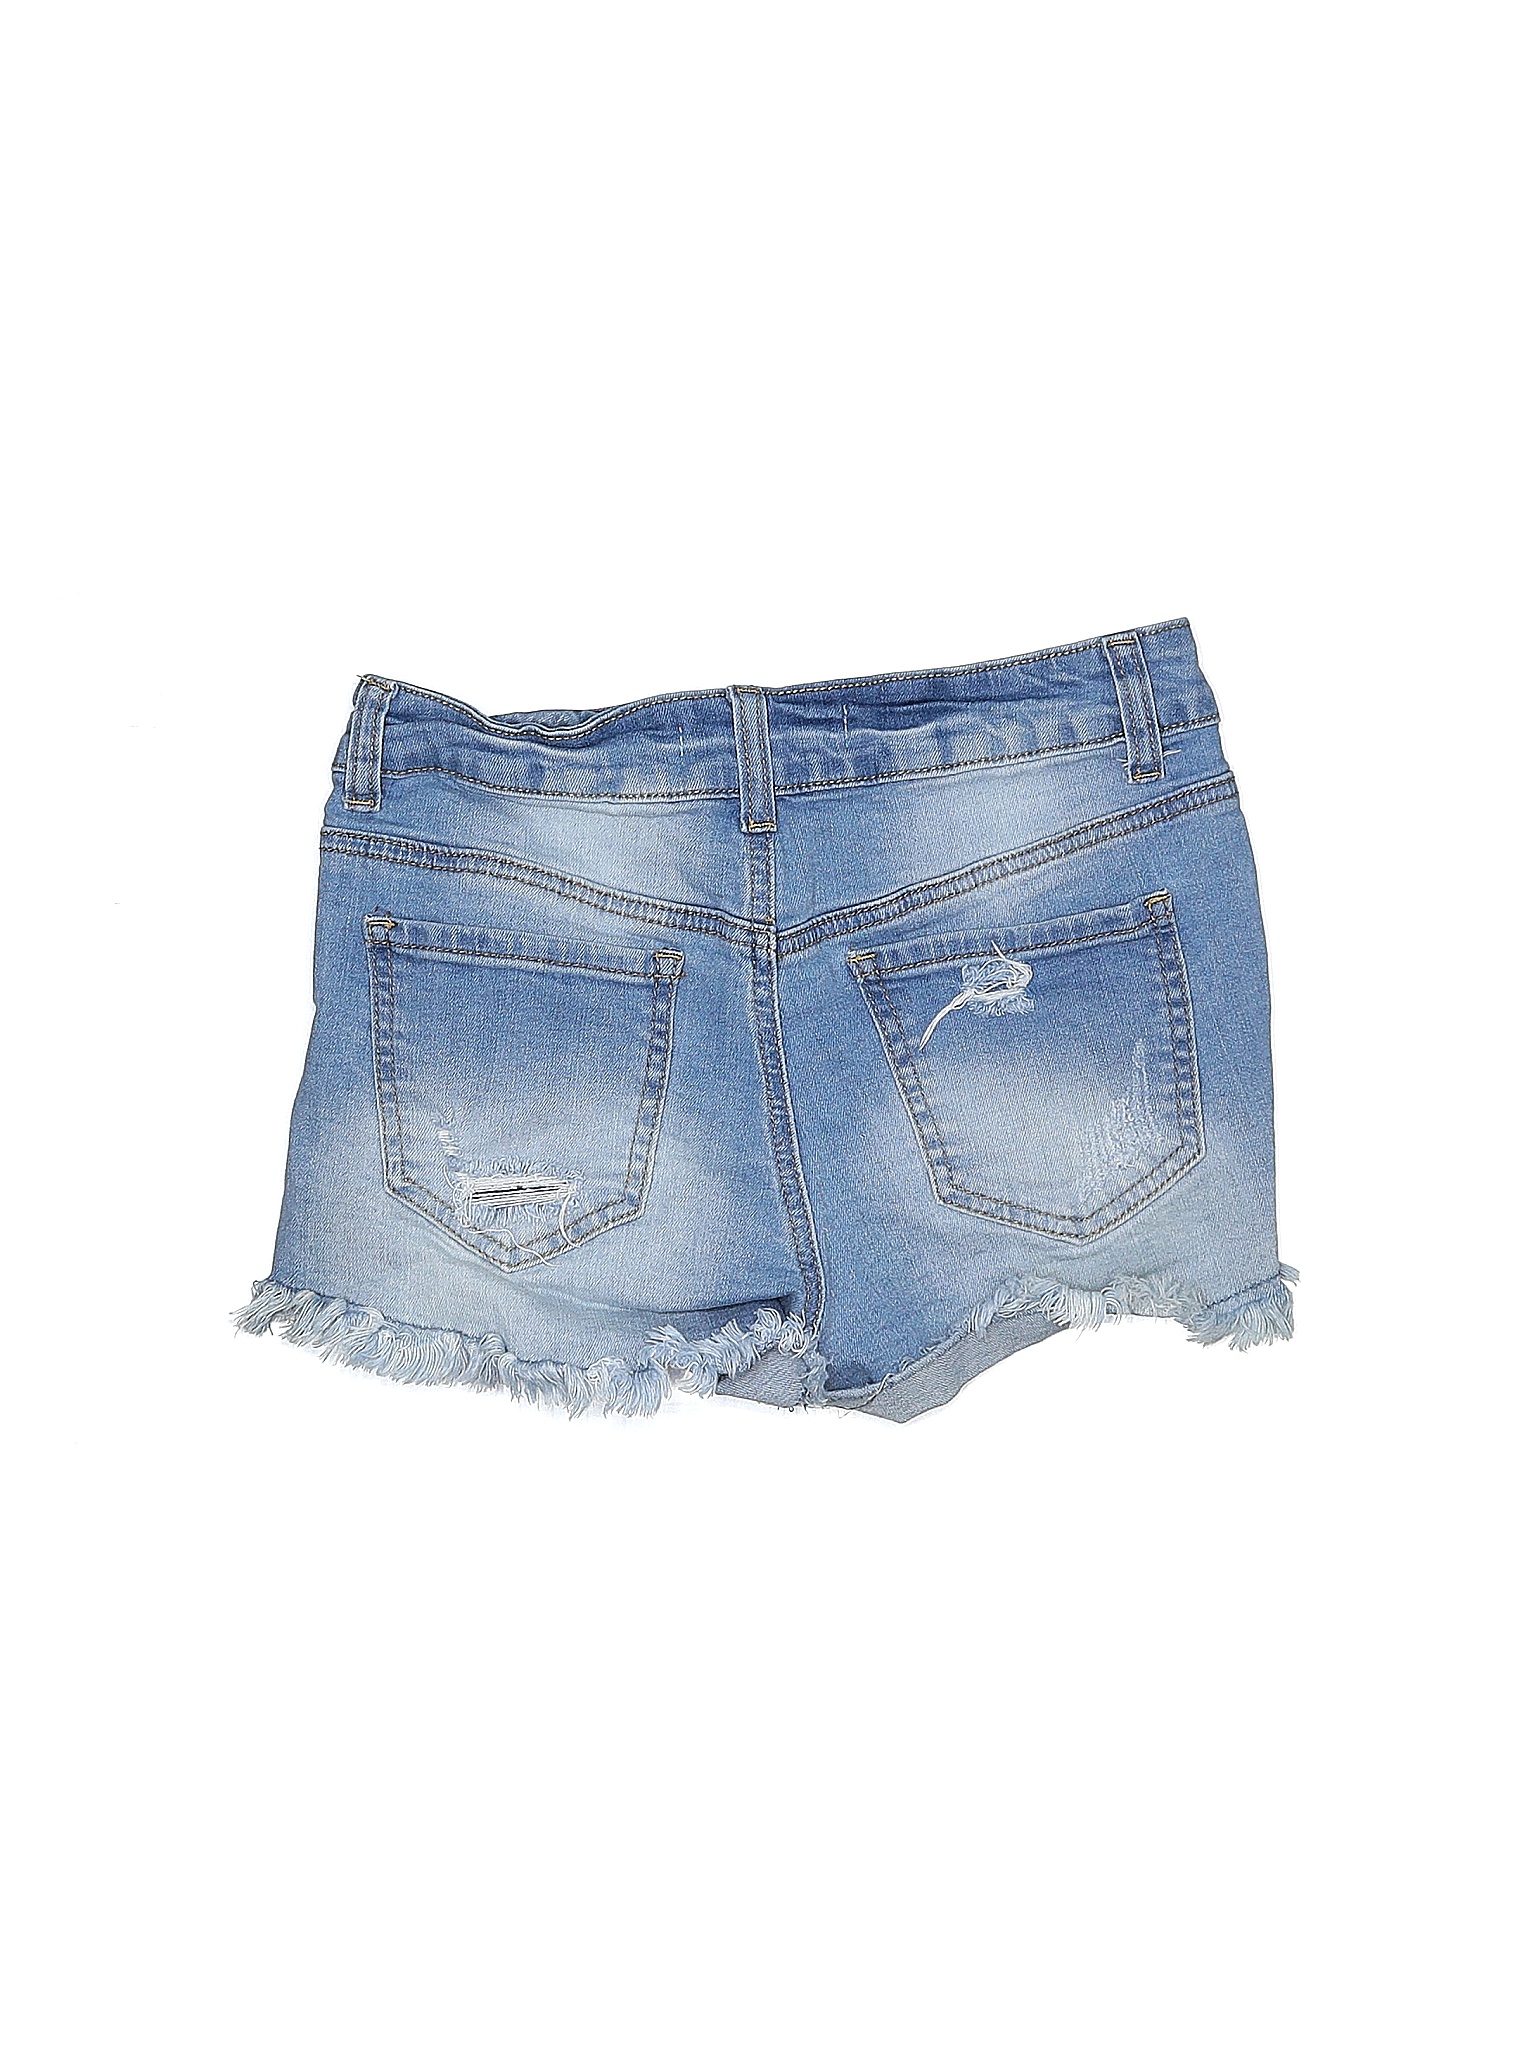 Wax Jean Solid Blue Denim Shorts Size S - 62% off | thredUP